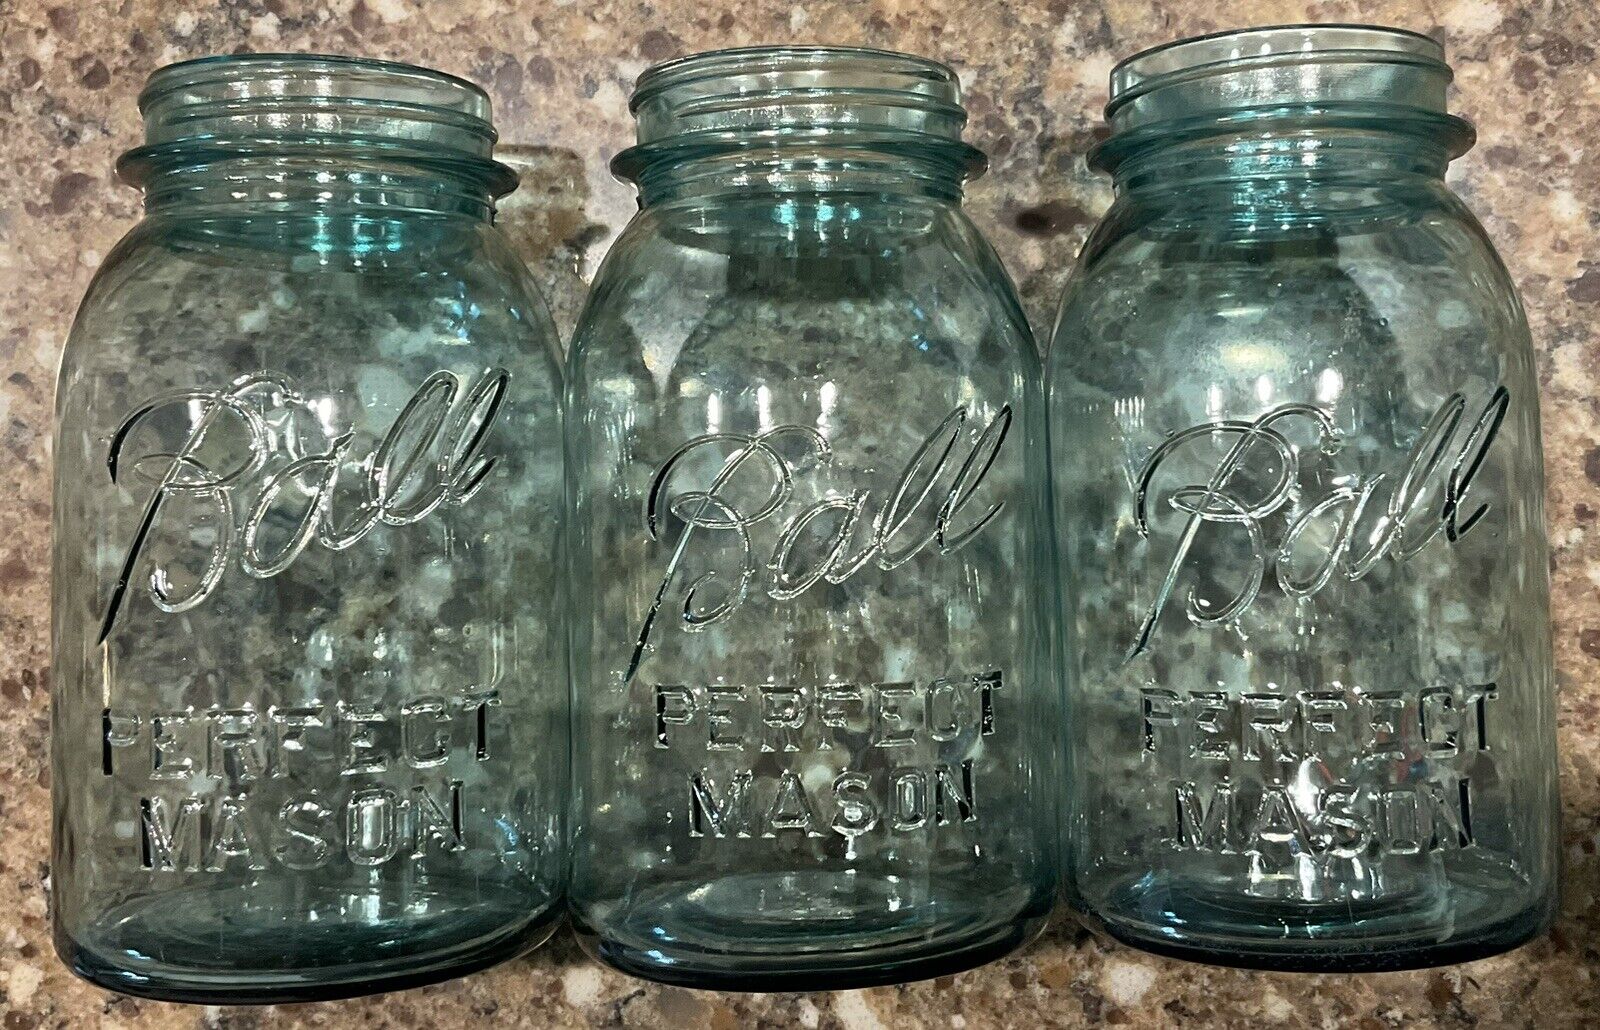 3 Vintage BLUE 1 Quart Ball Jars - Perfect Mason